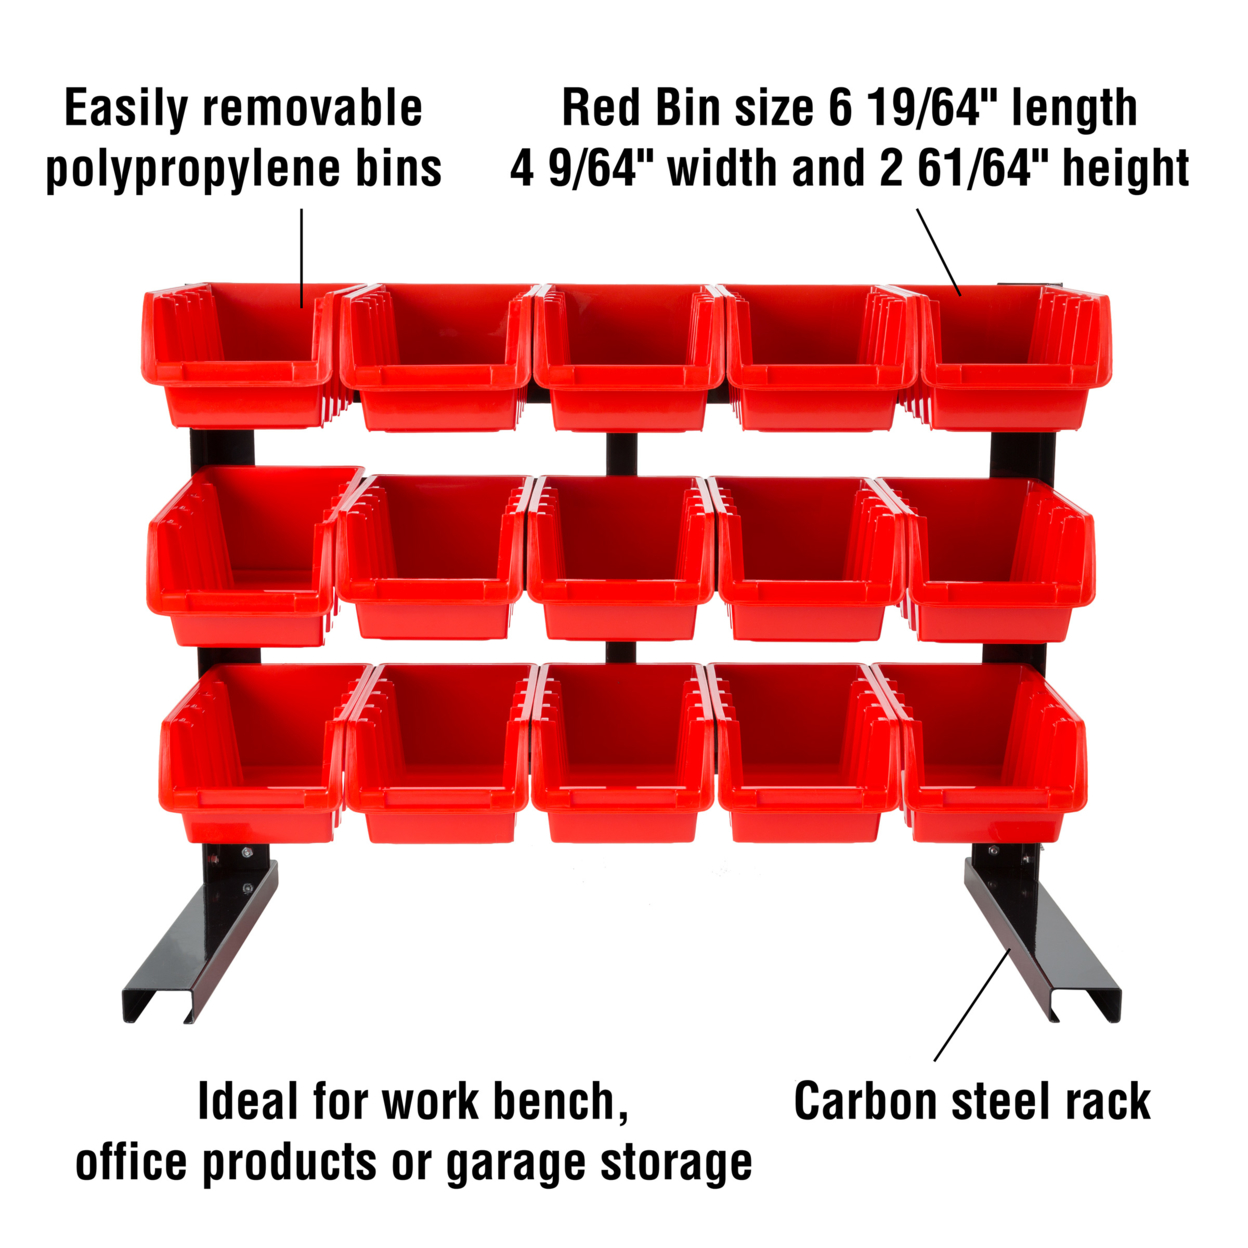 15 Bin Storage Rack Organizer- Durable Carbon Steel Stackable Drawers Crafts, Office Supplies